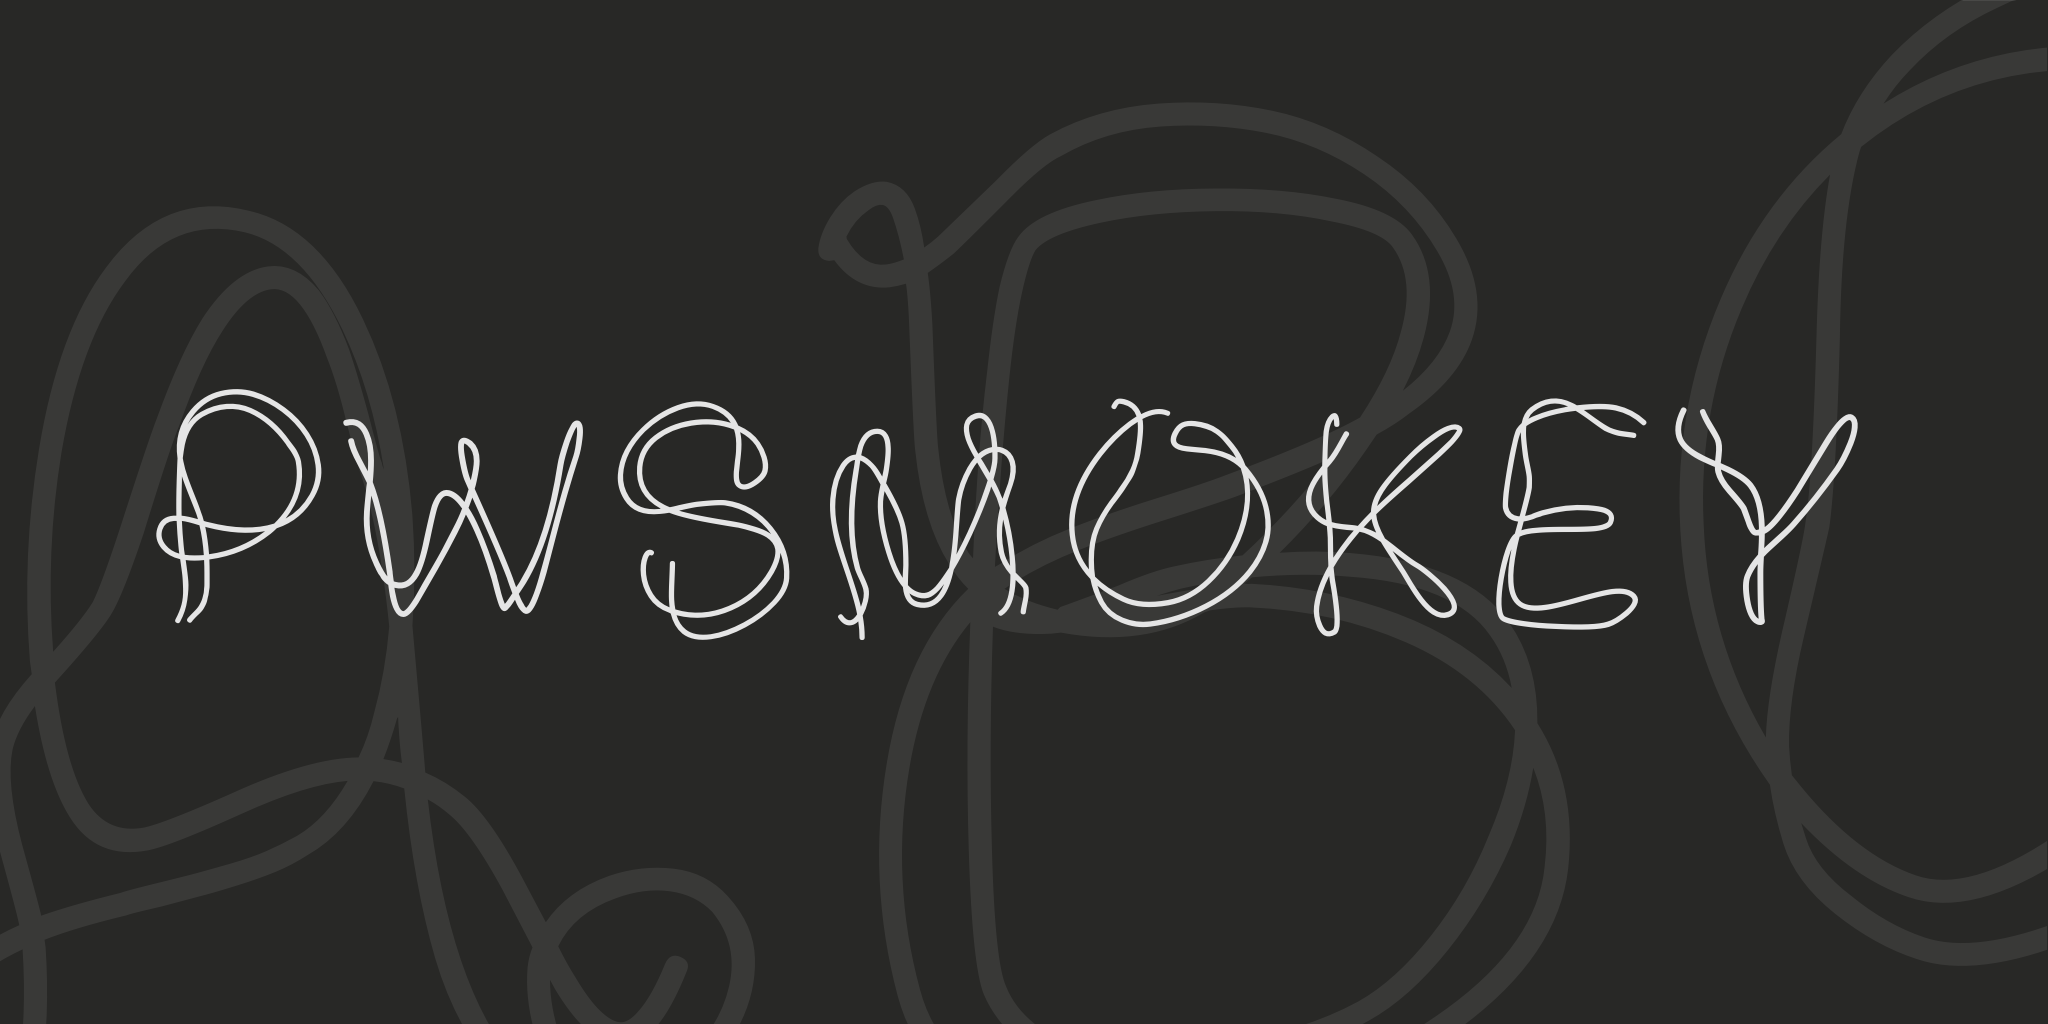 Pw Smokey